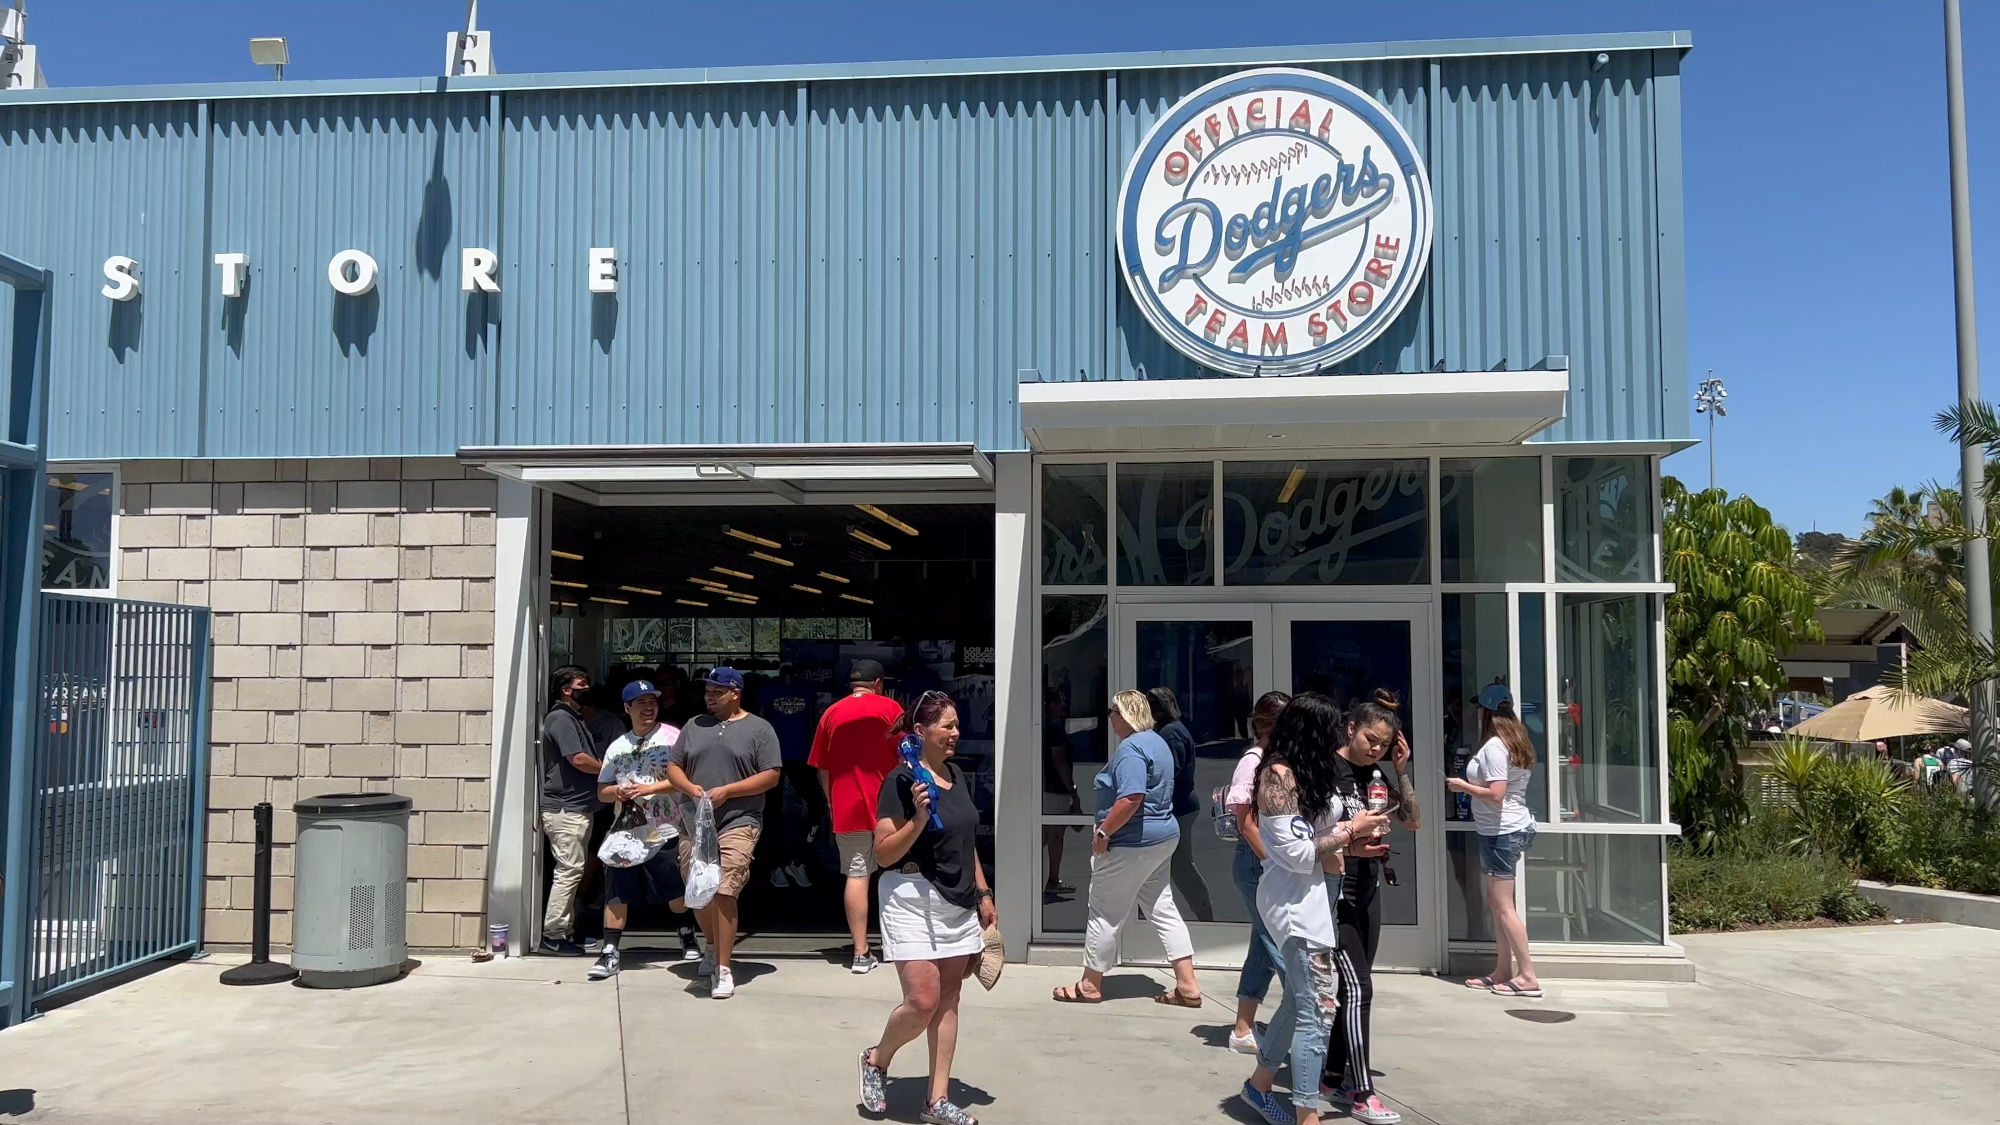 Official Team Stores at Dodger Stadium